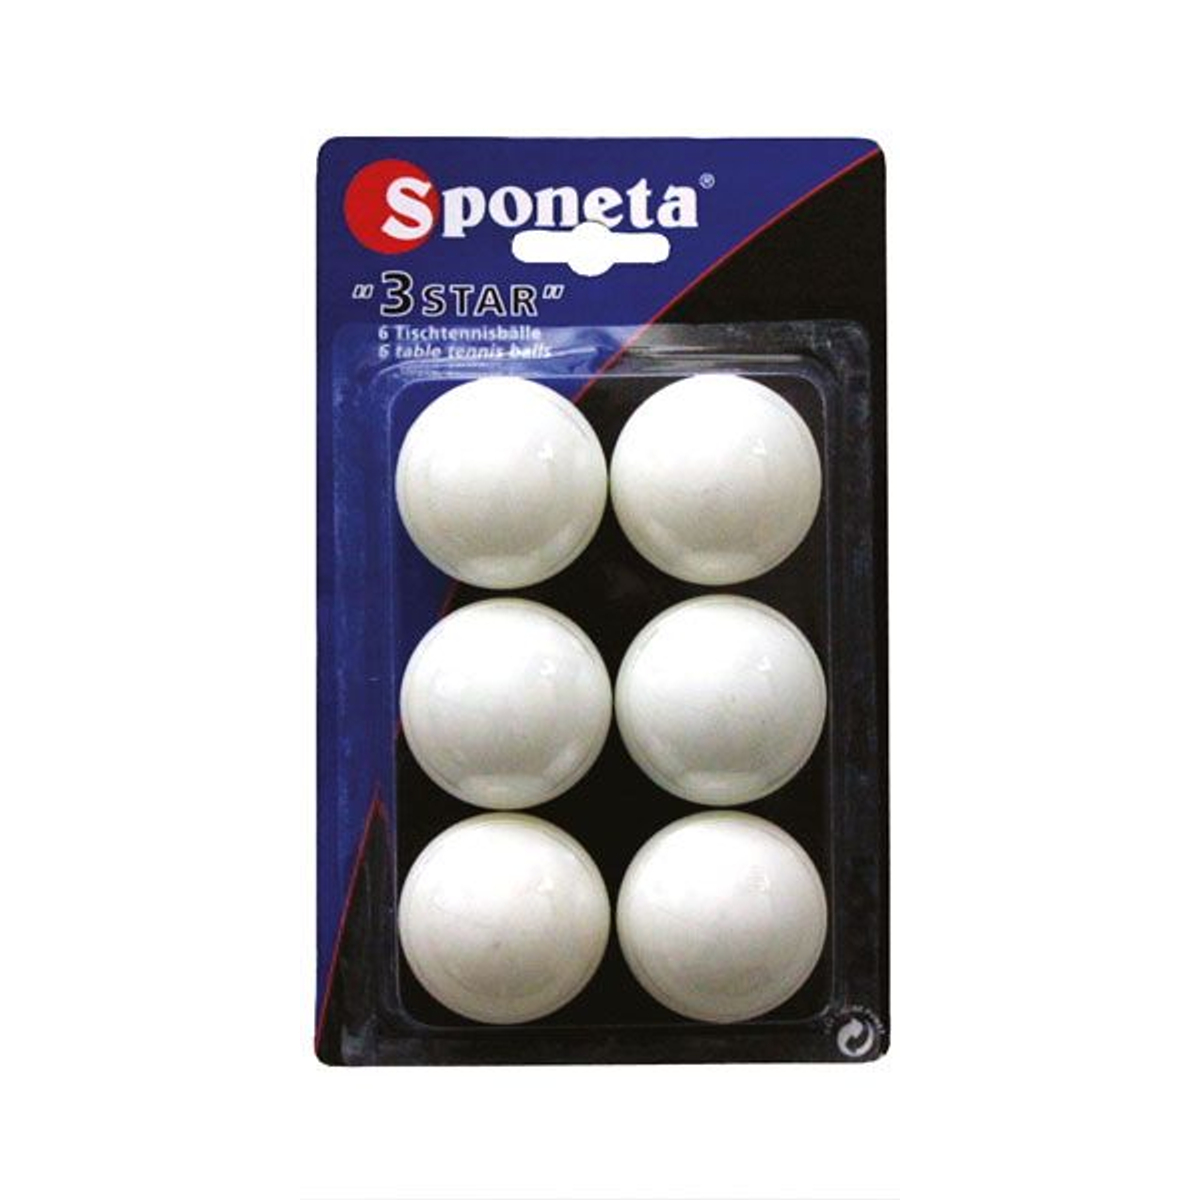 Sponeta 3 Ster Tafeltennisballen